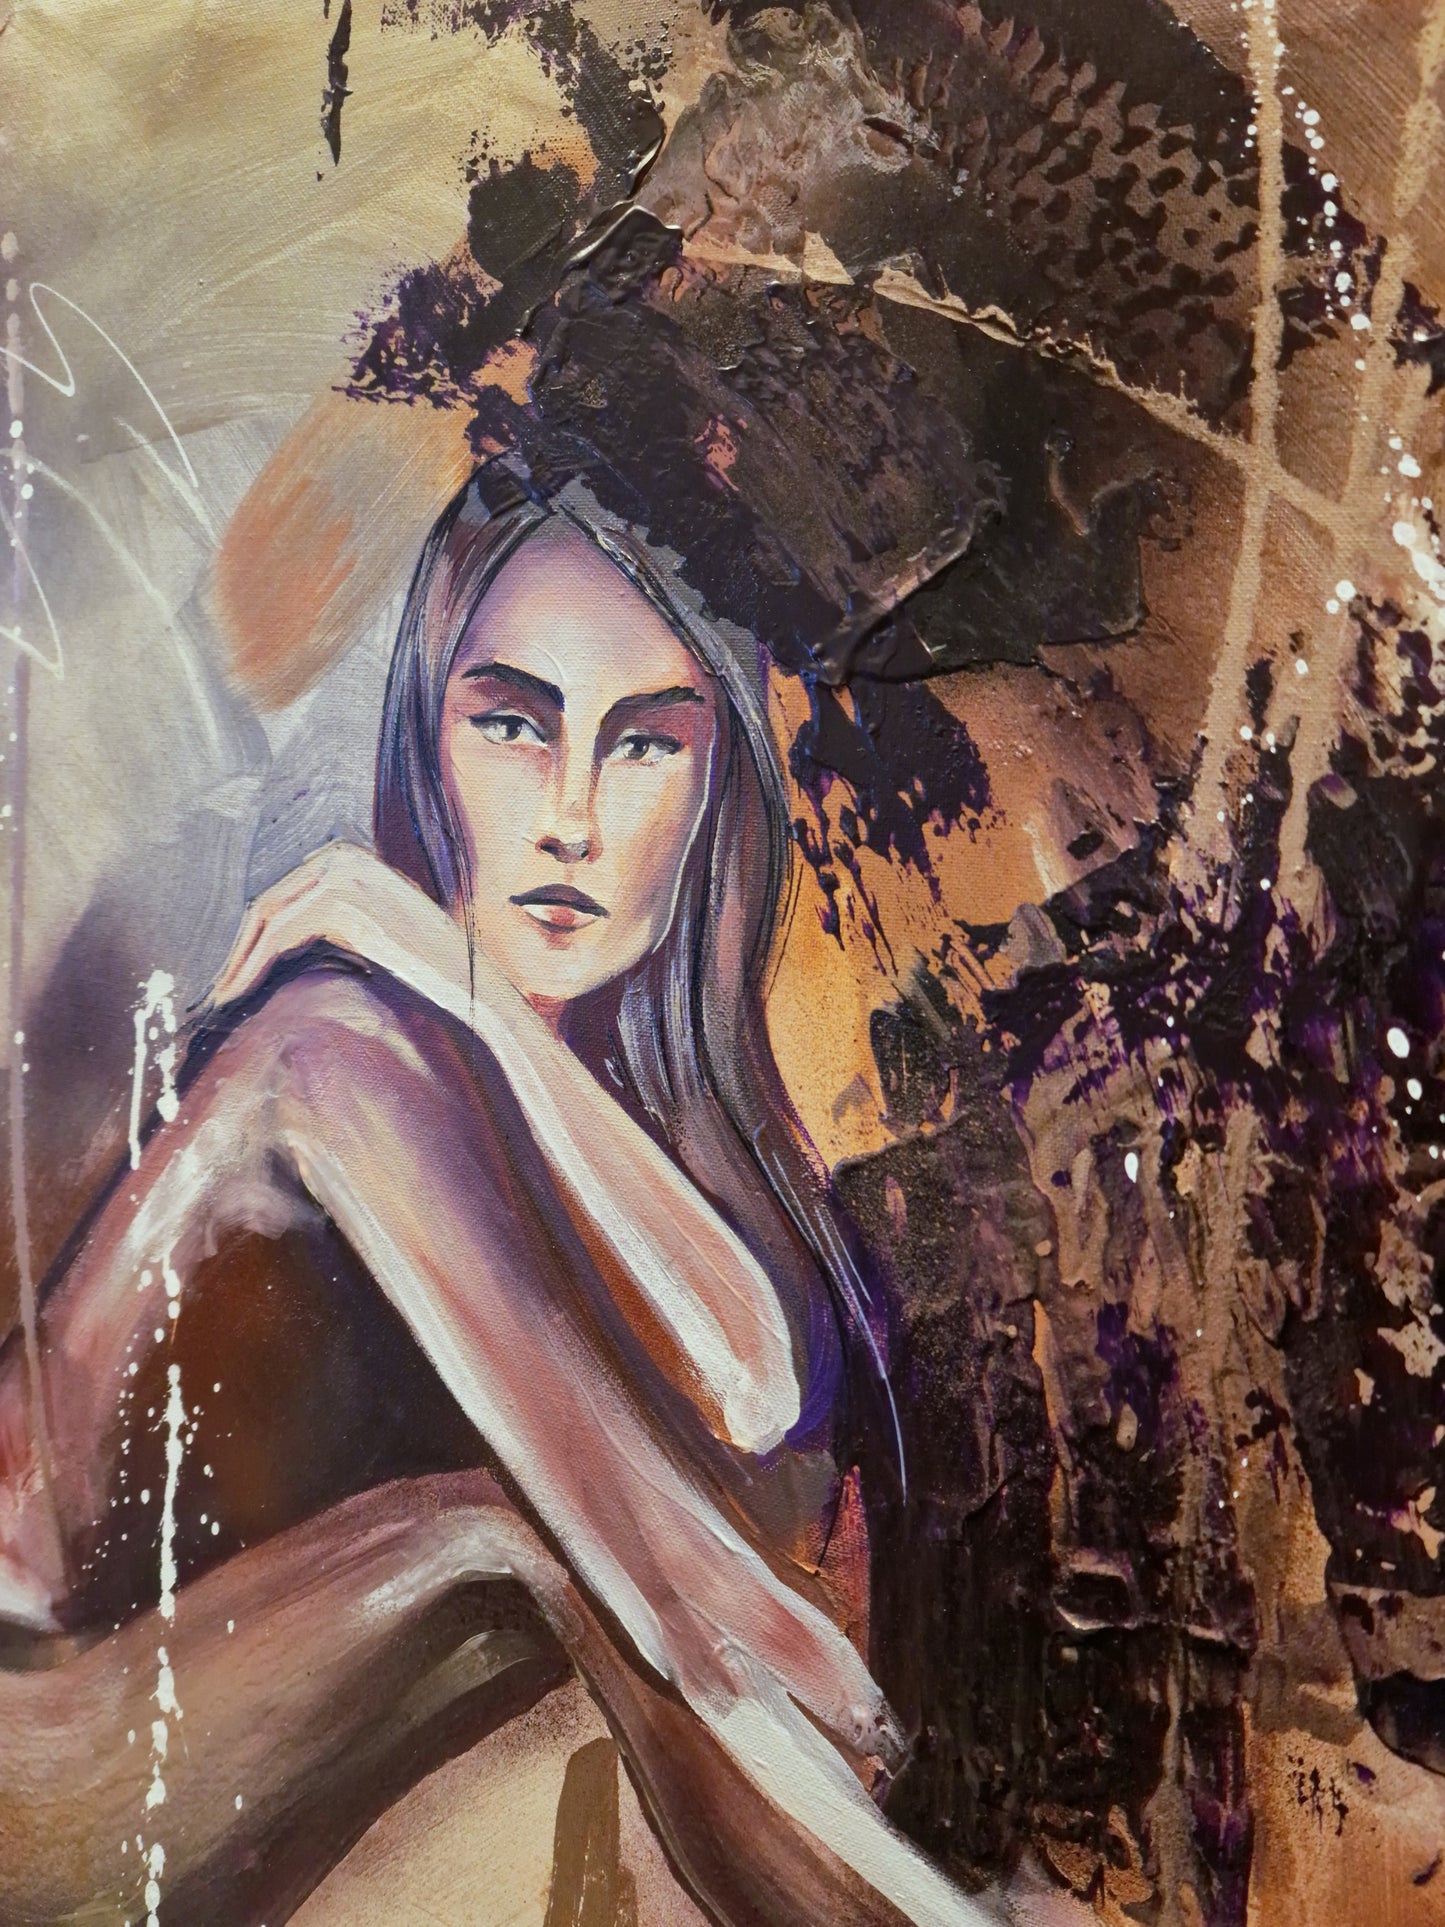 Original painting "Siren Woman" 80x100cm